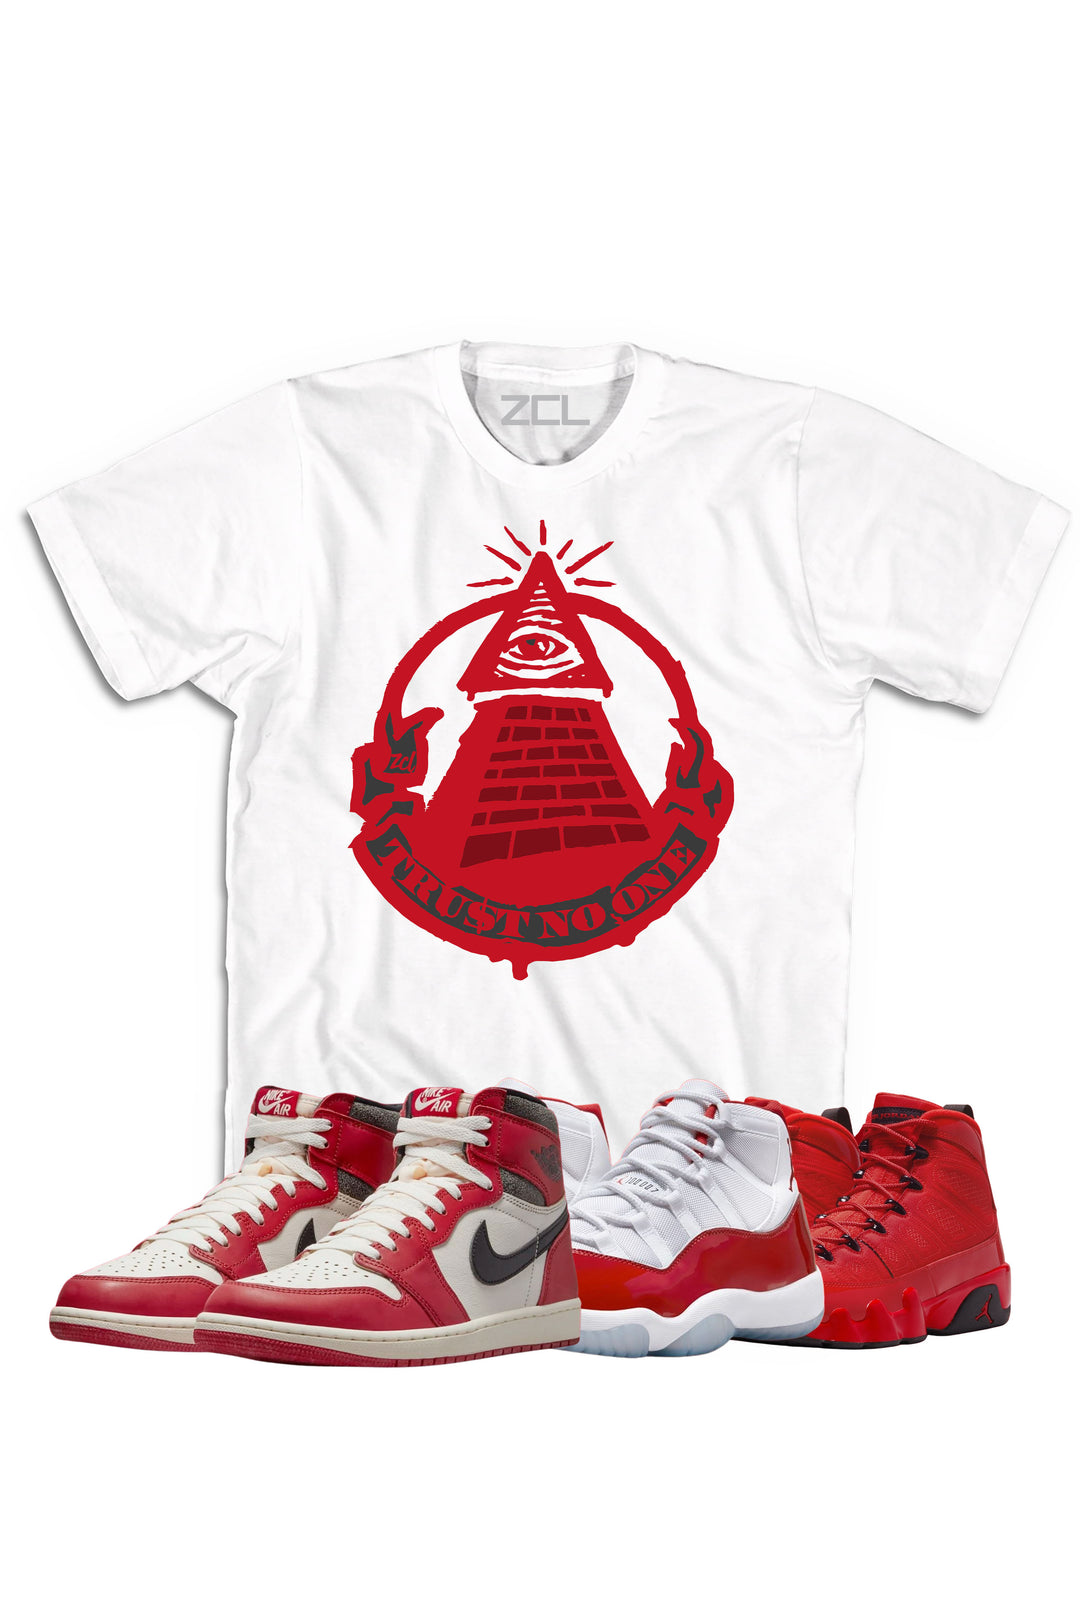 Air Jordan "Trust No One" Tee Lost & Found - Cherry Red - Zamage